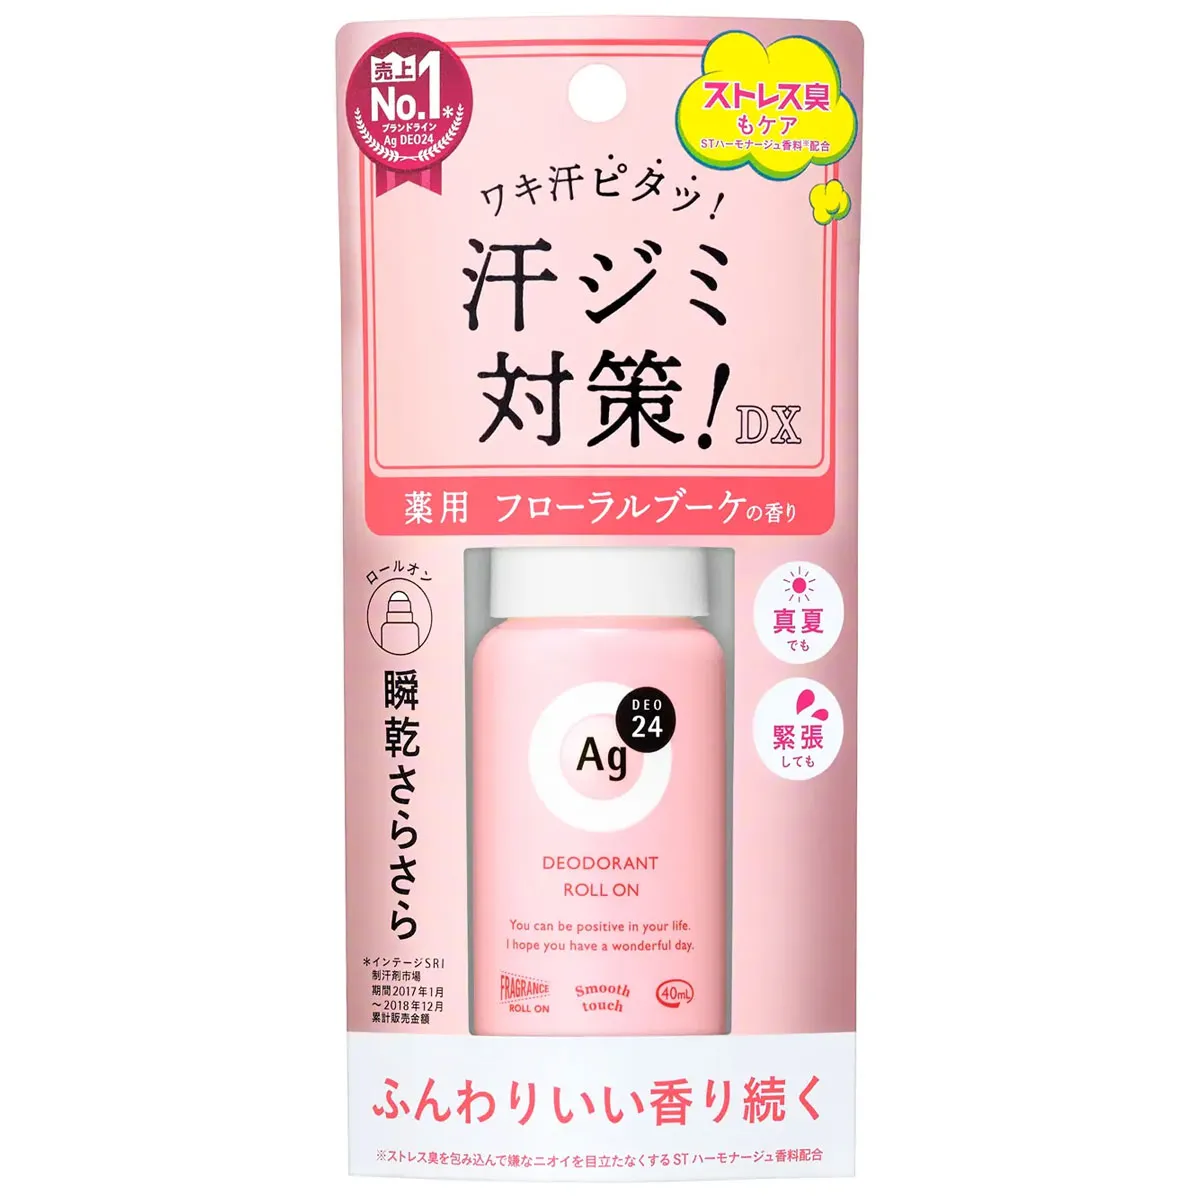 Роликовый дезодорант с ионами серебра и ароматом цветом Shiseido Ag 24 Deo Premium Deodorant roll-on Floral Aroma